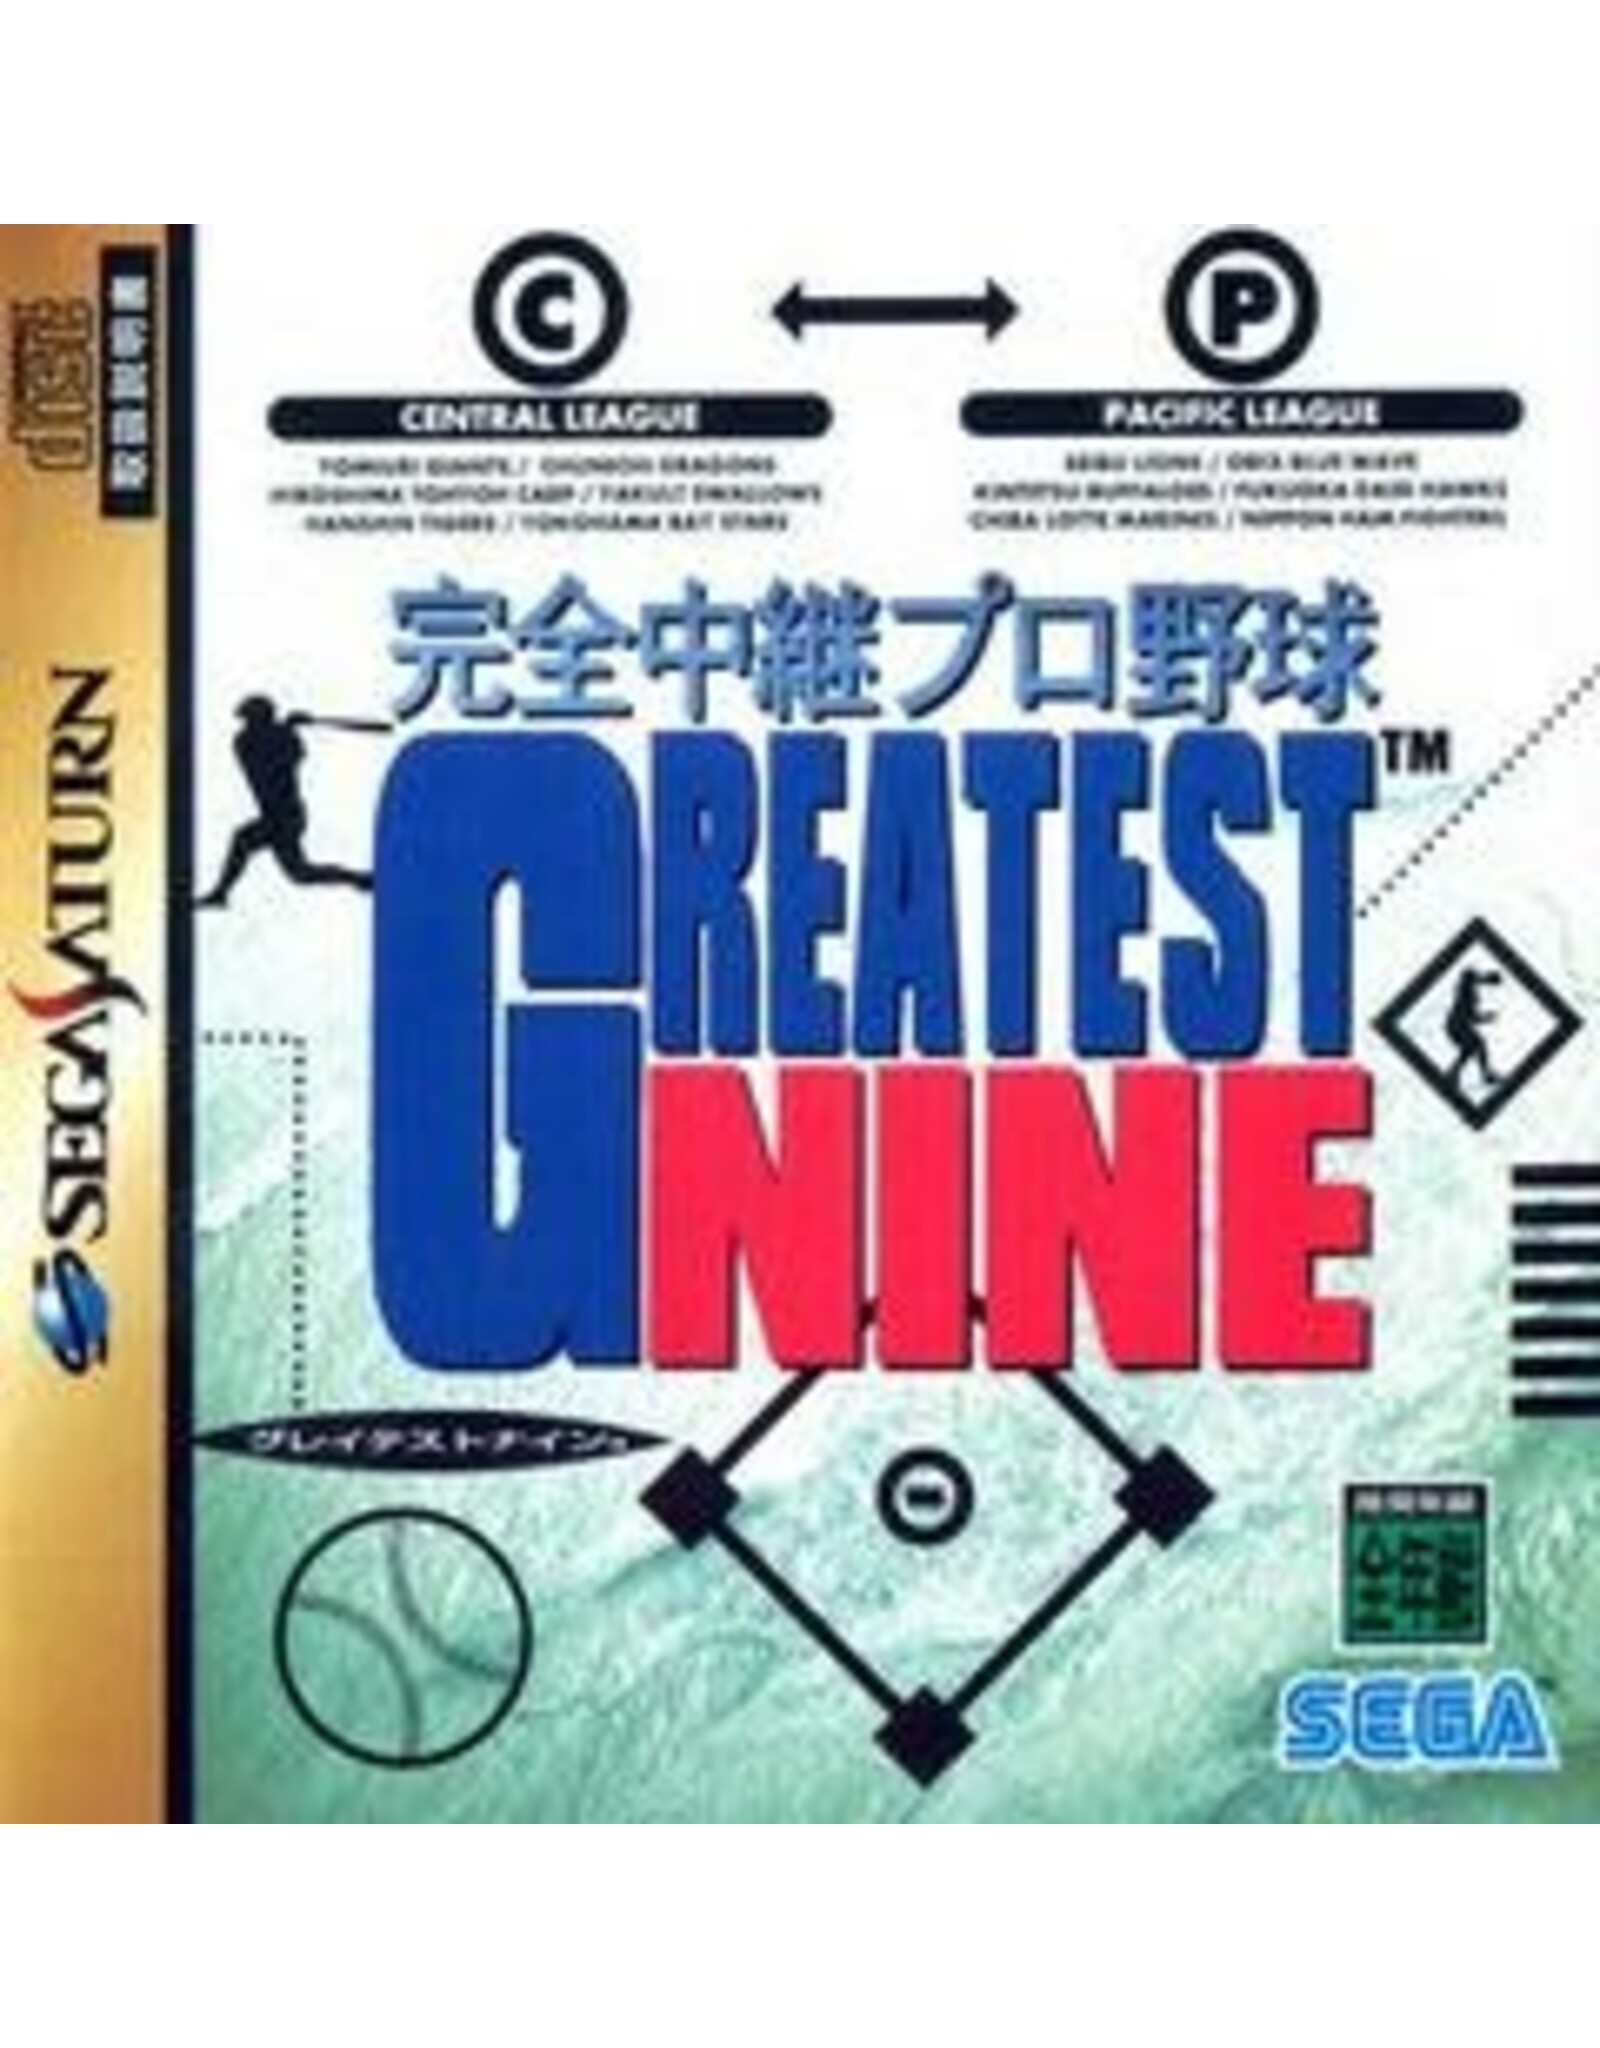 Sega Saturn Greatest Nine (CiB, Missing Spine Card, Damaged Jewel Case, JP Import)